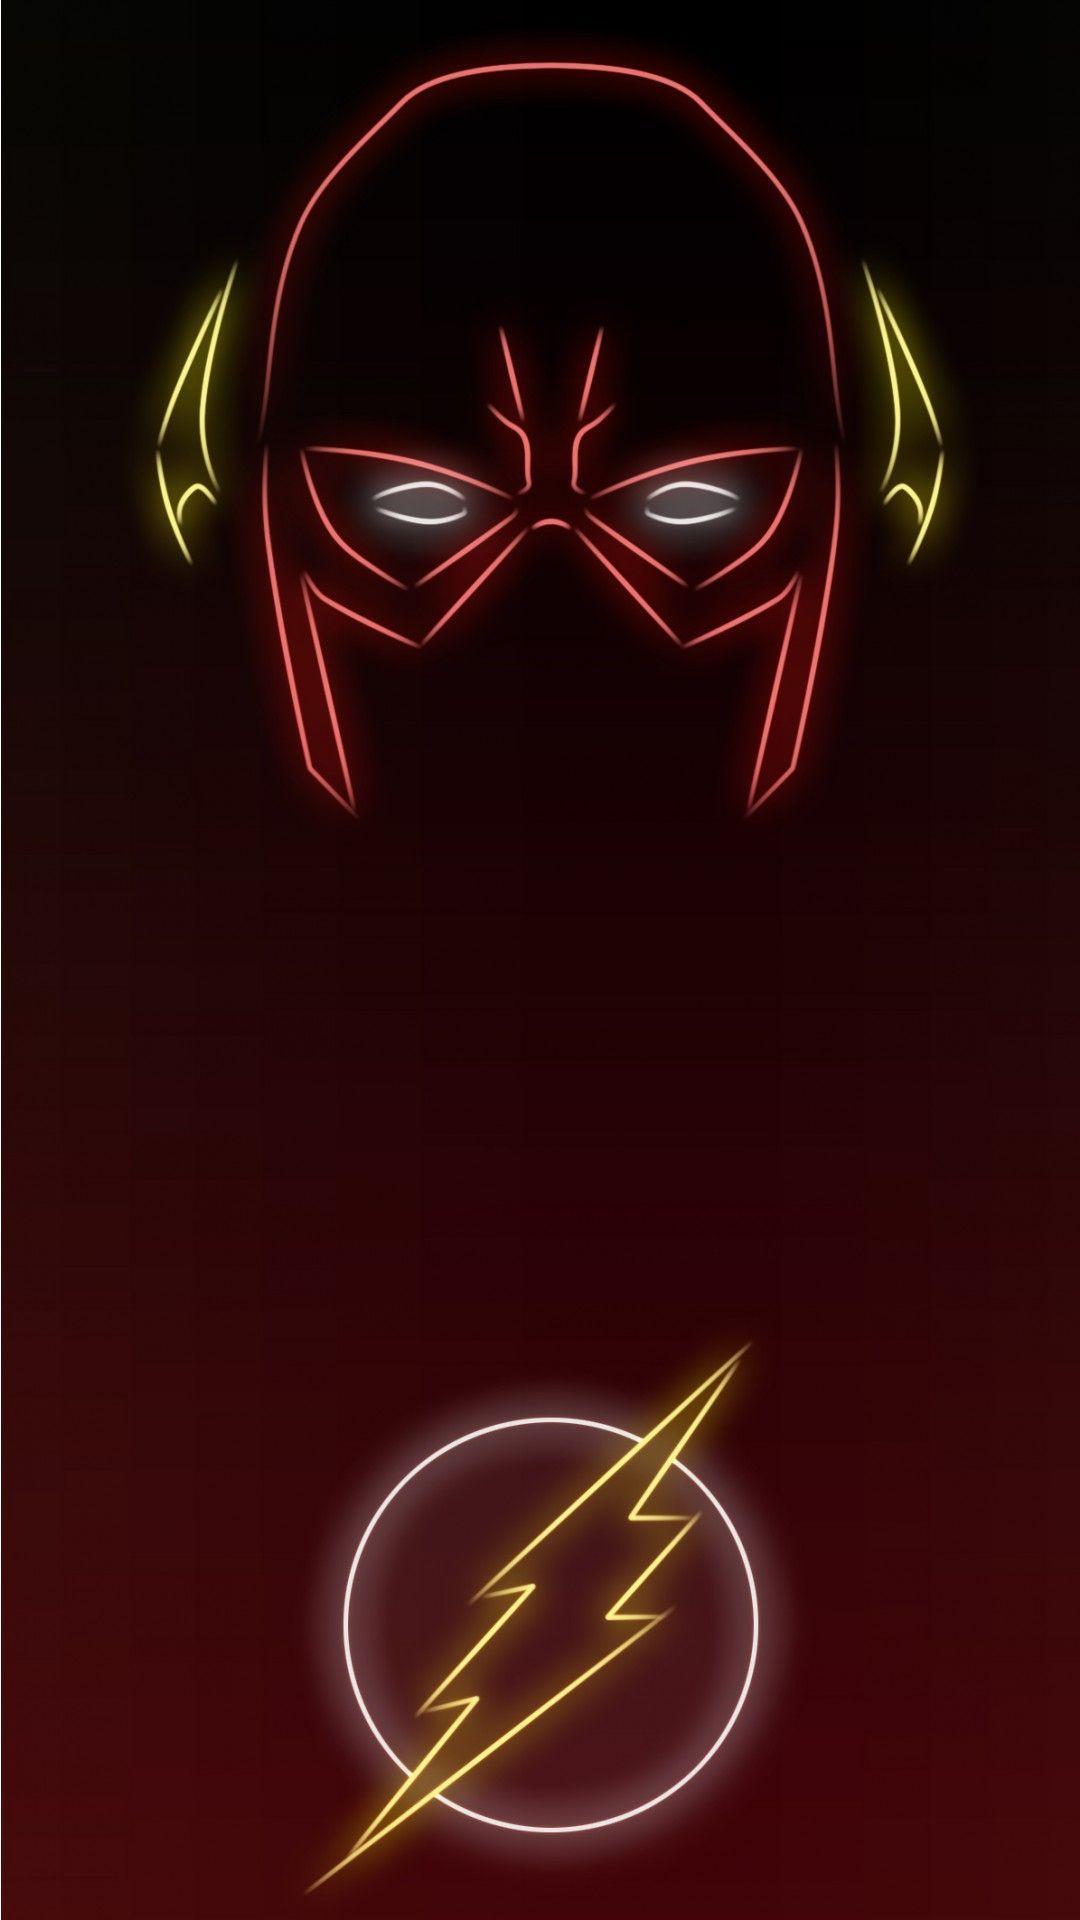 Neon Light The Flash. Flash wallpaper, Flash comics, Flash logo